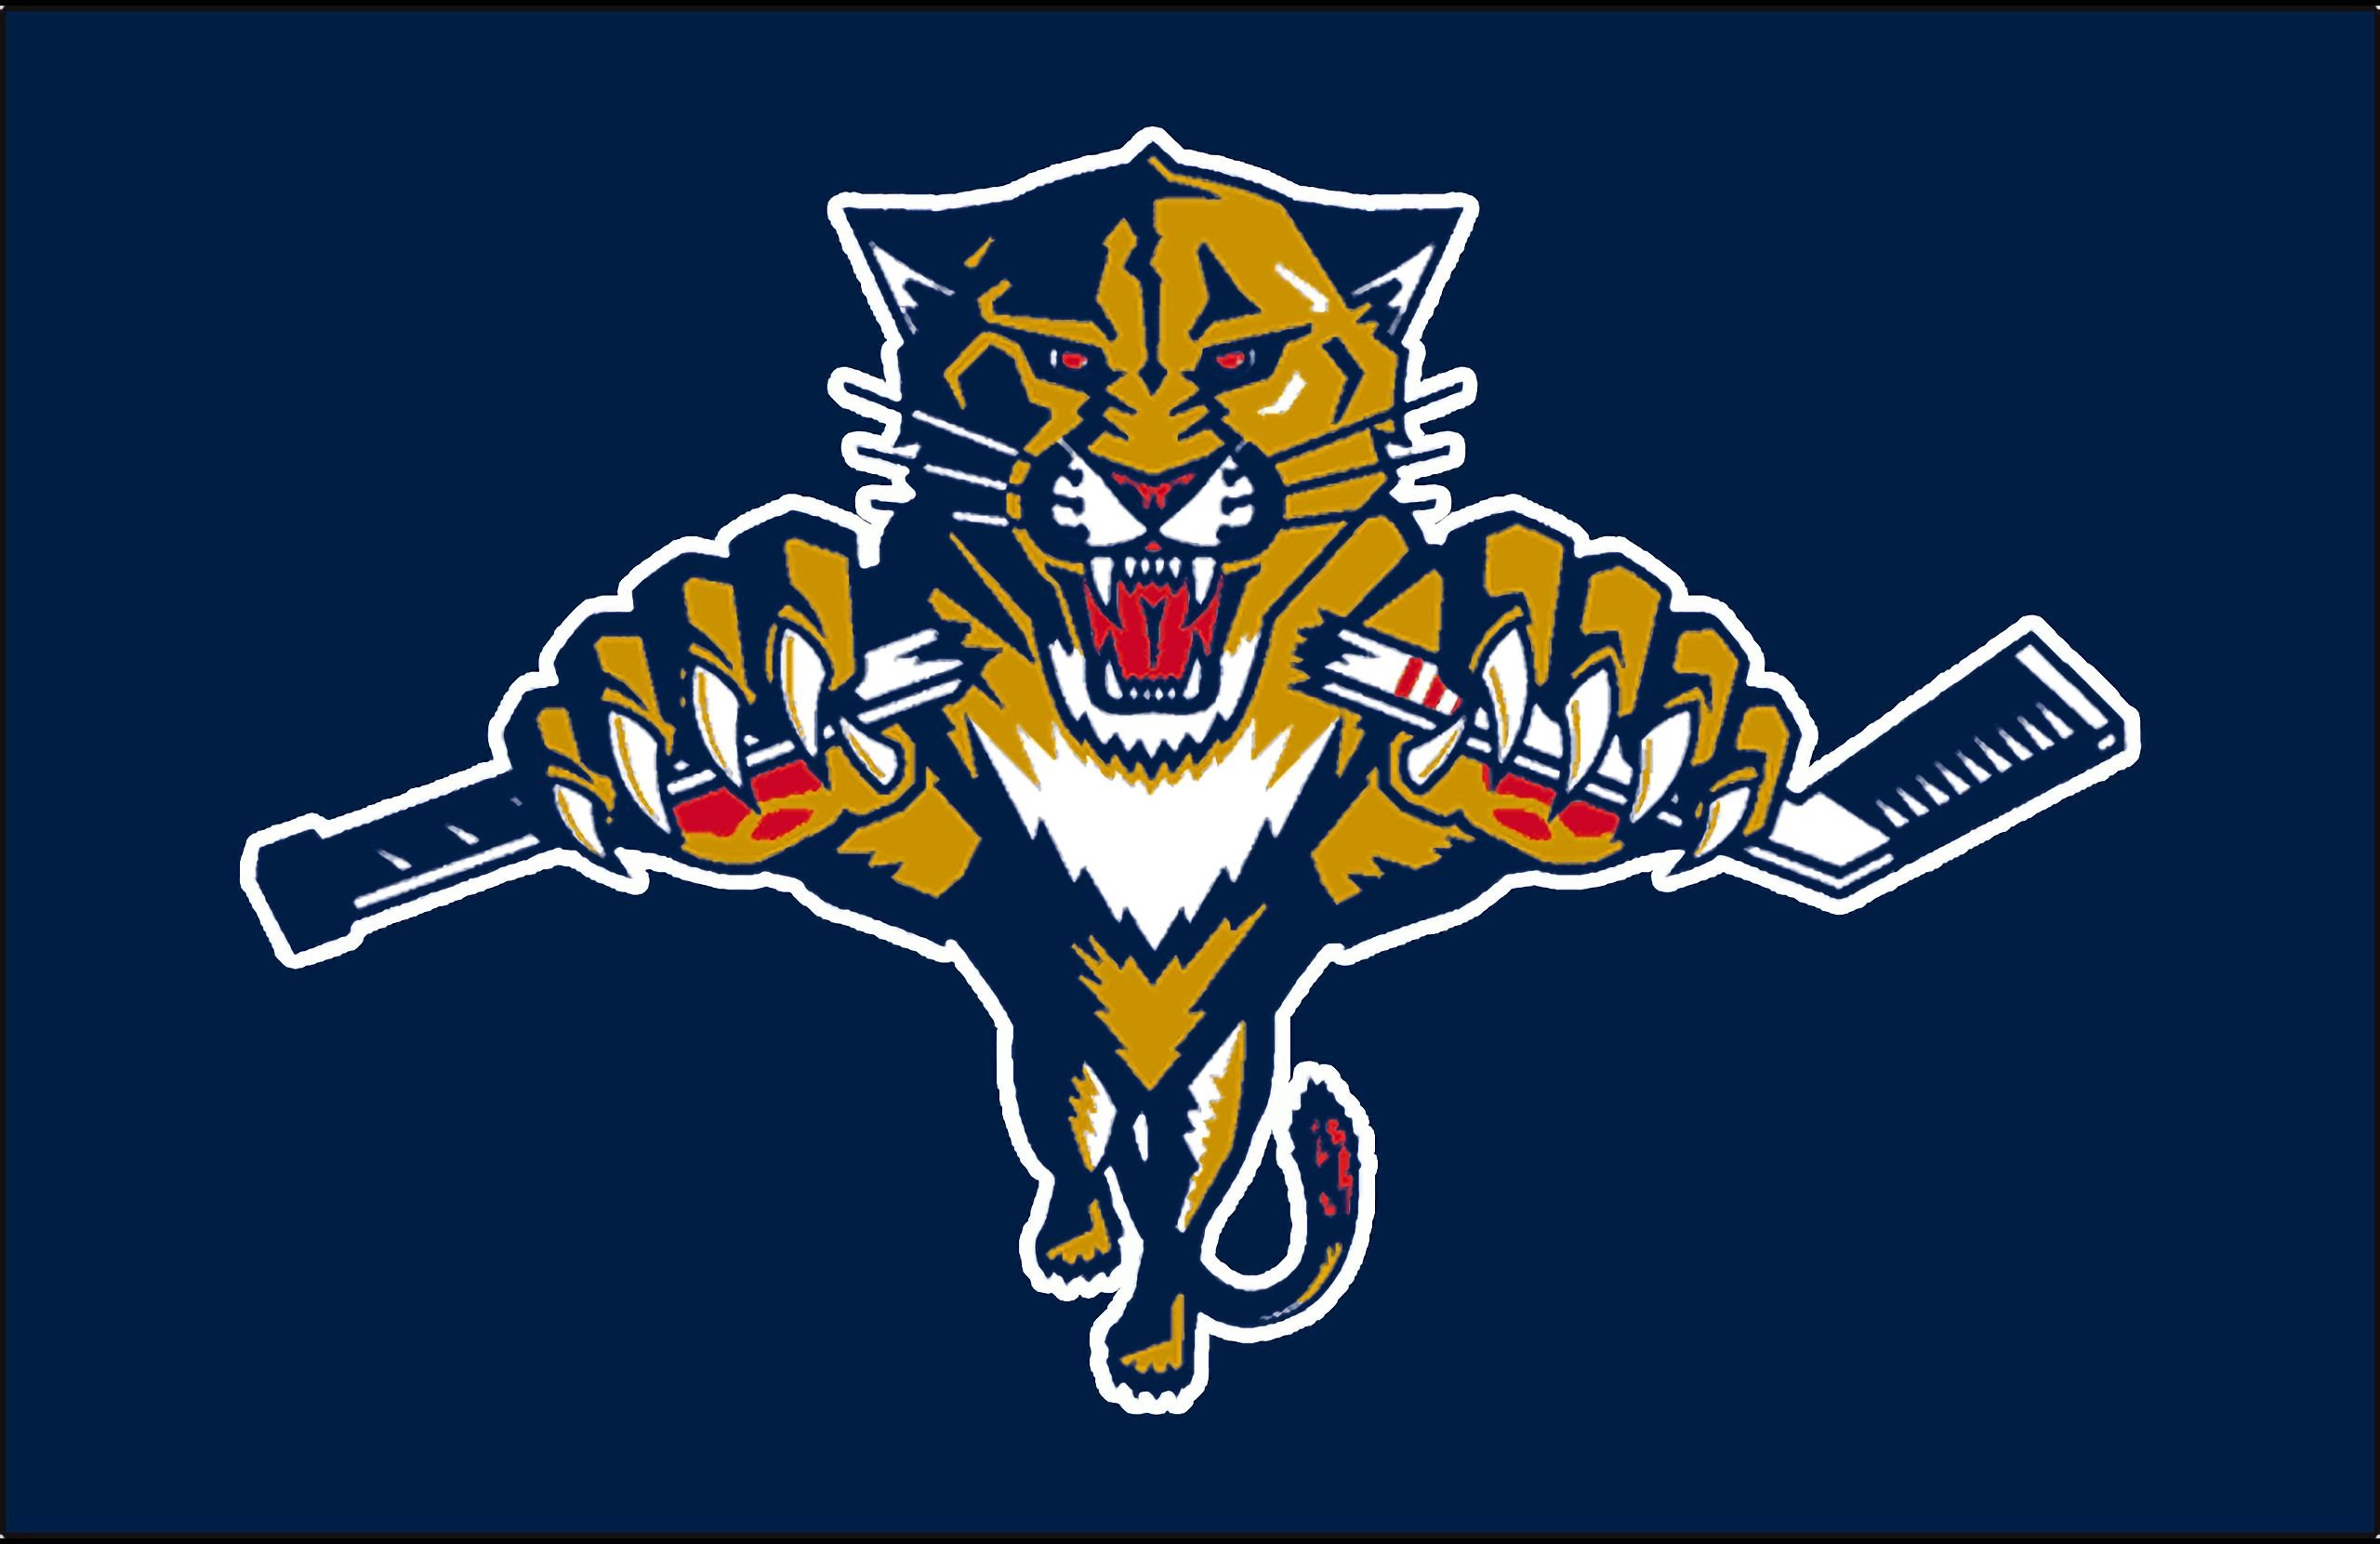 Картинки хоккейных команд. Флорида Пантерз эмблема. Эмблема хоккейной команды Флорида Пантерс. Хк Флорида Пантерз логотип. Флорида Пантерз картинки.